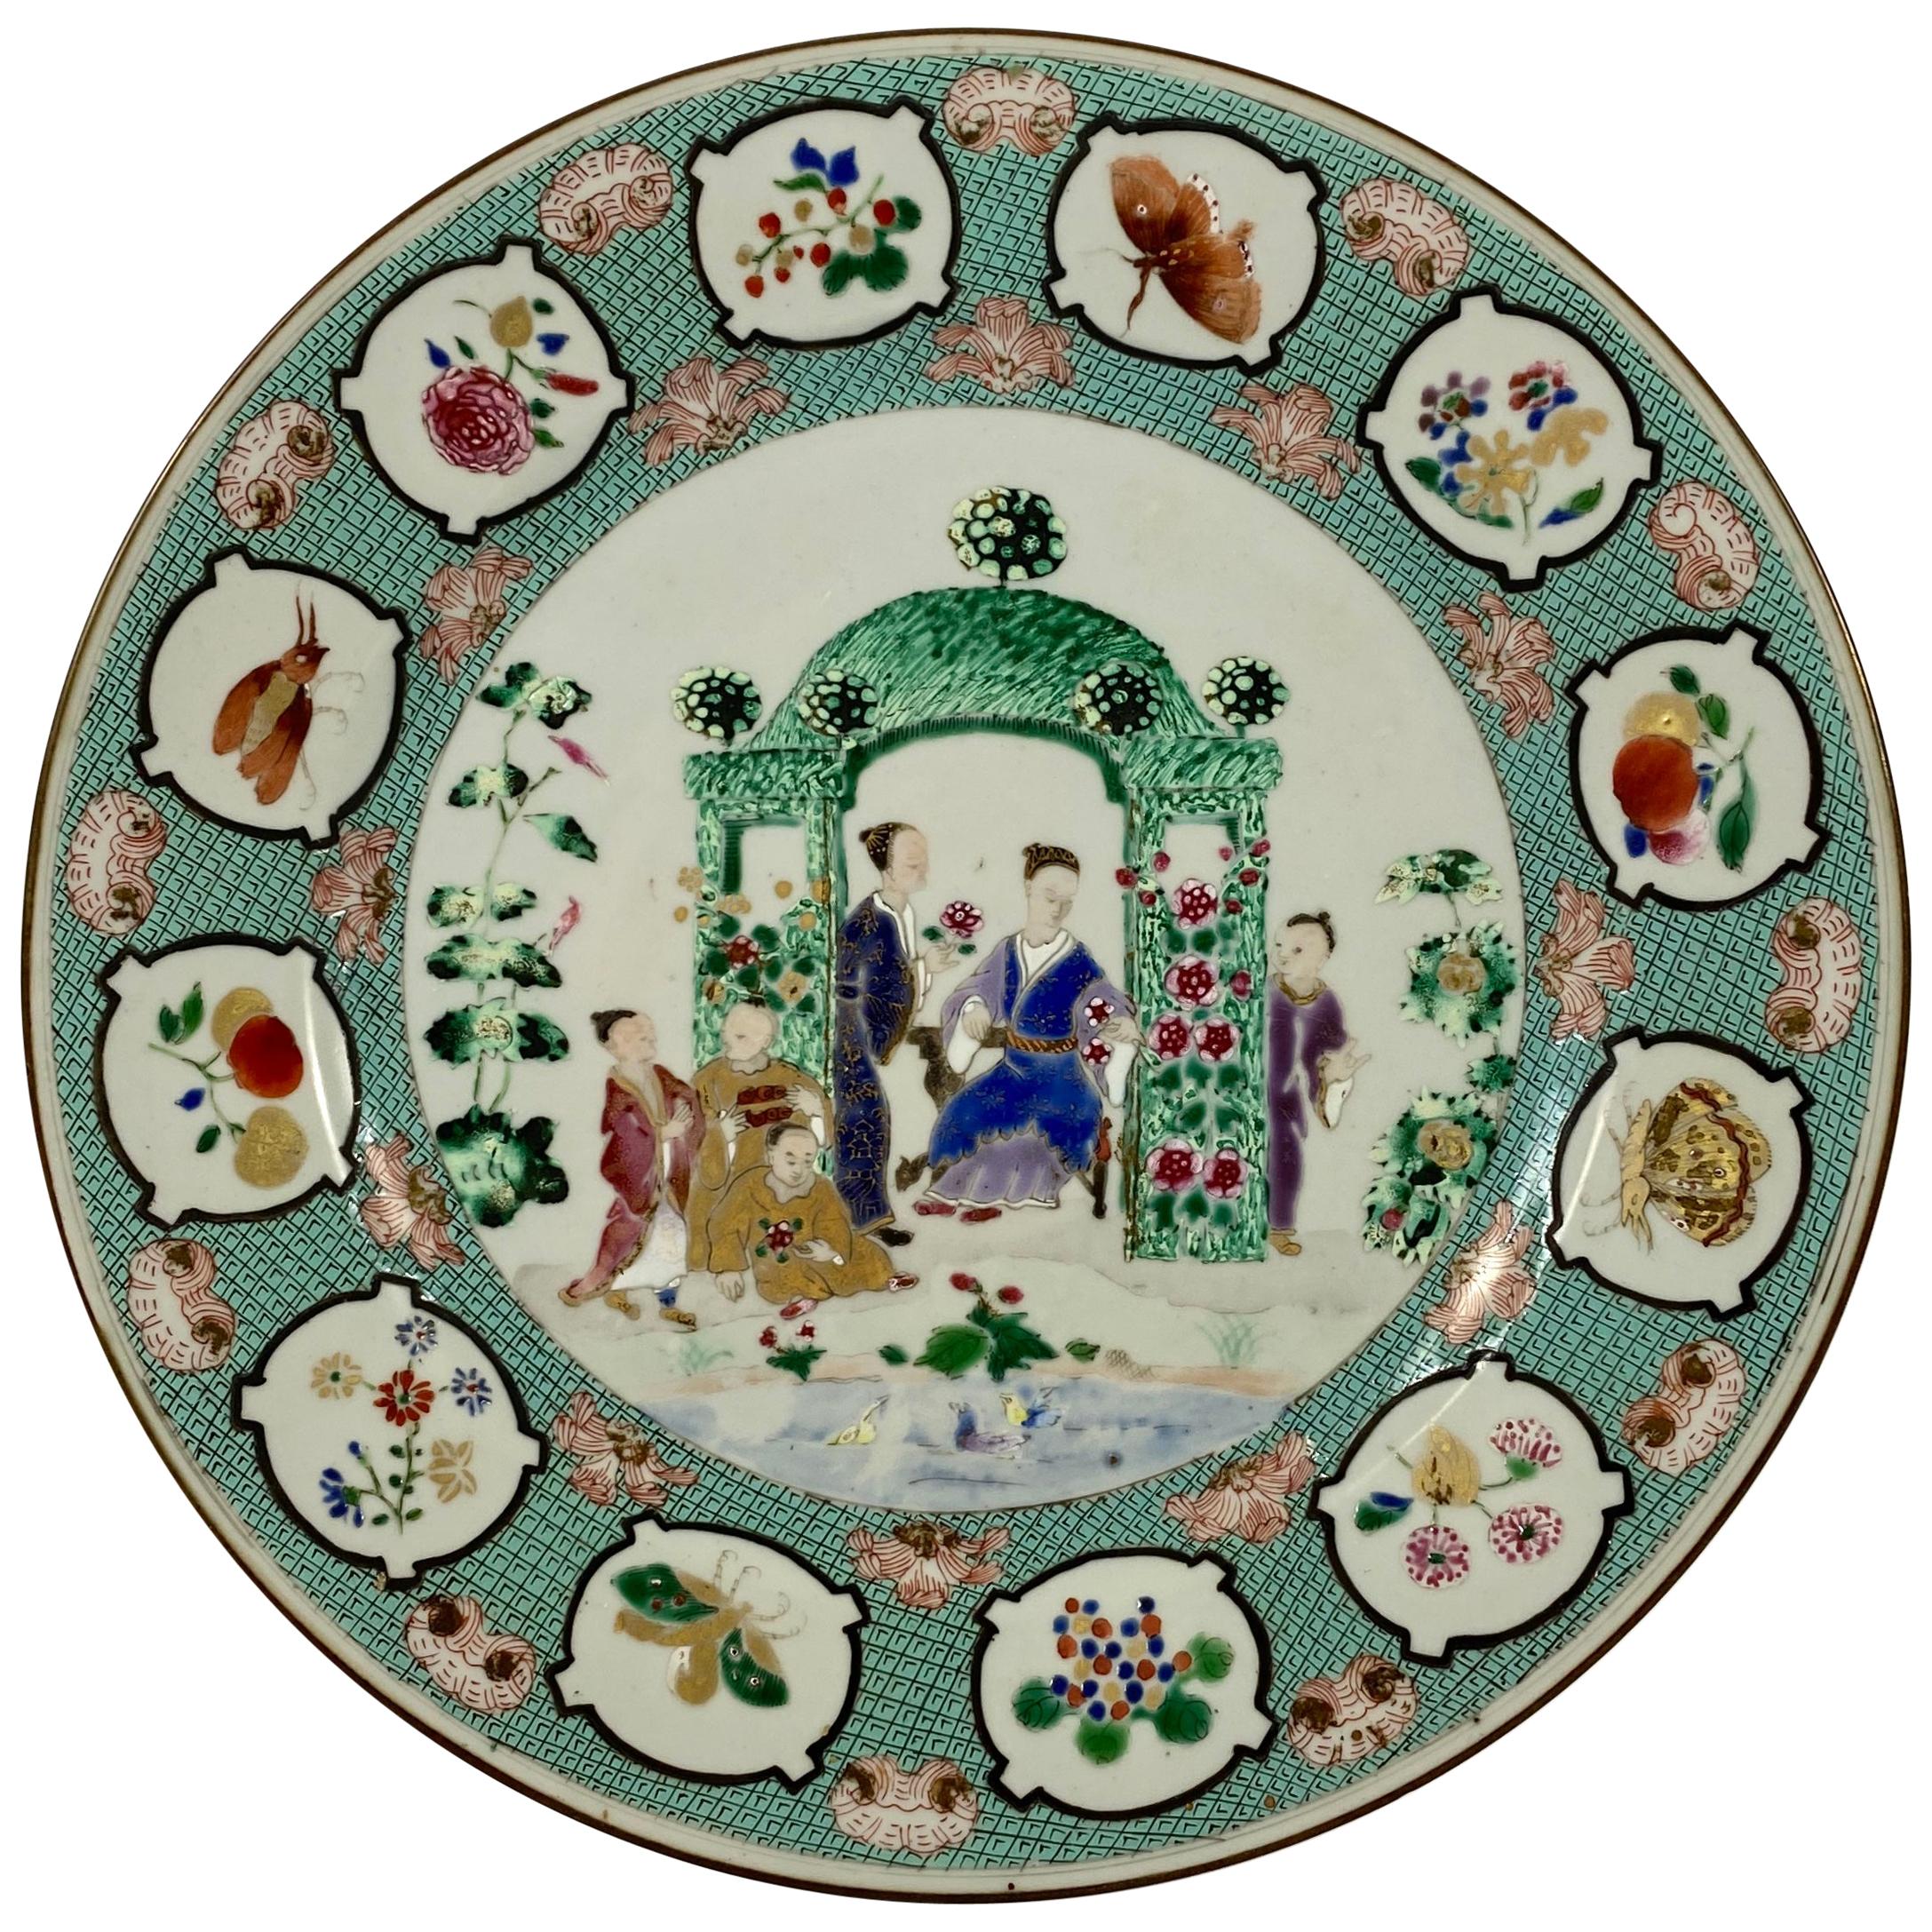 Chinese Porcelain Plate ‘Arbor’, Cornelis Pronk, circa 1738